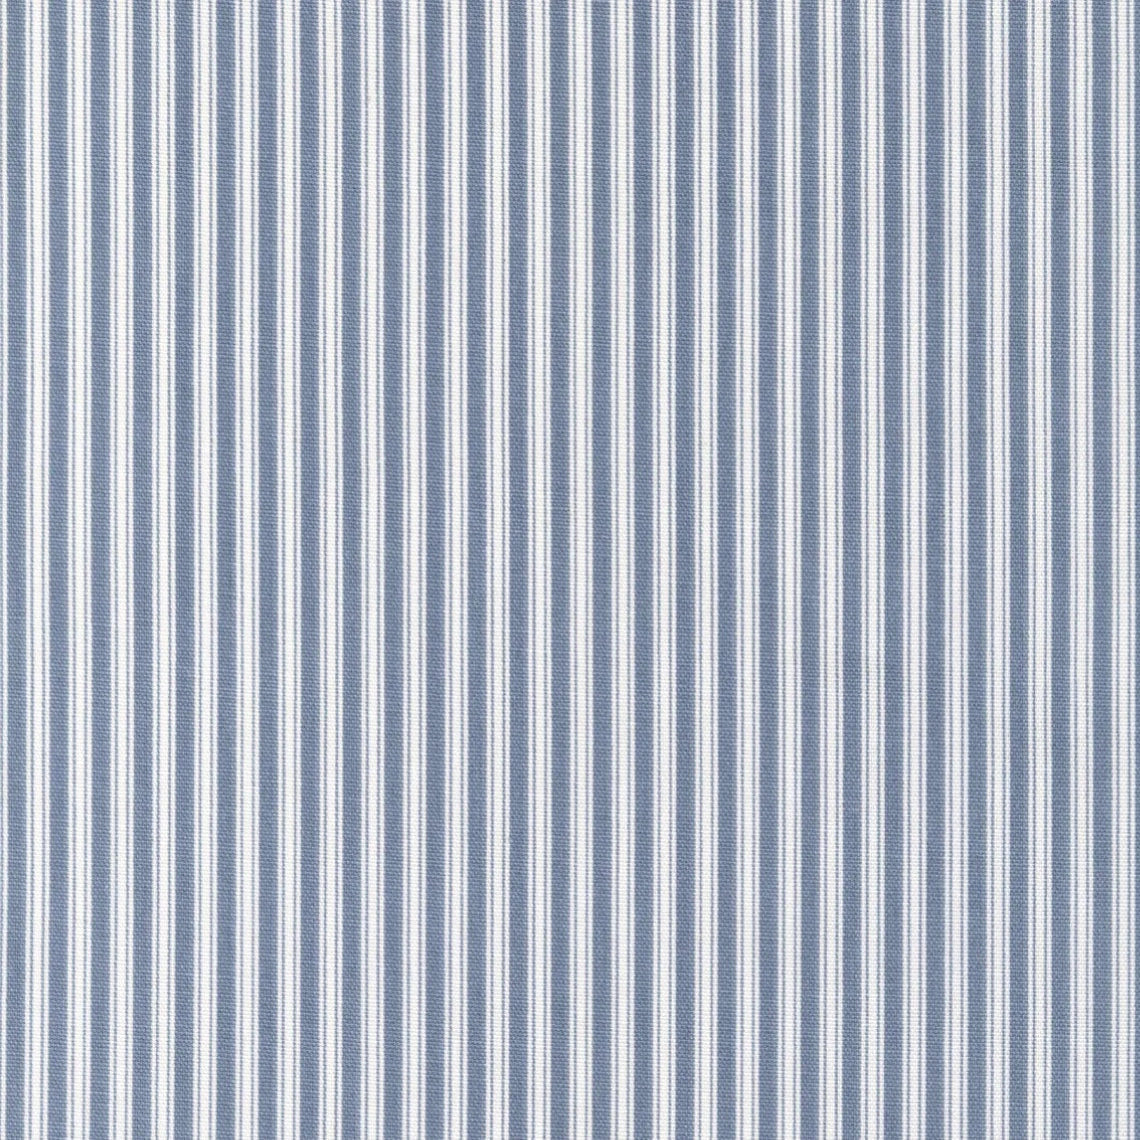 duvet cover in polo sail blue stripe on white